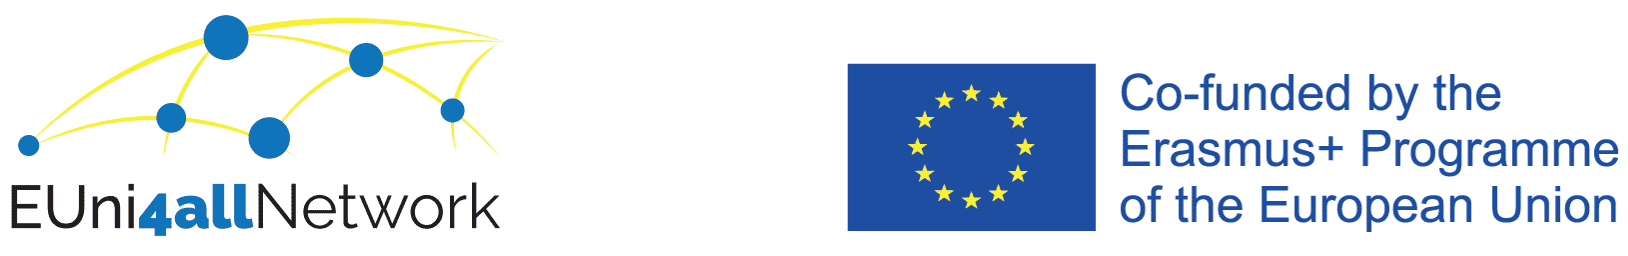 EUni4ALL and Erasmus logo/></p>
</body></html>